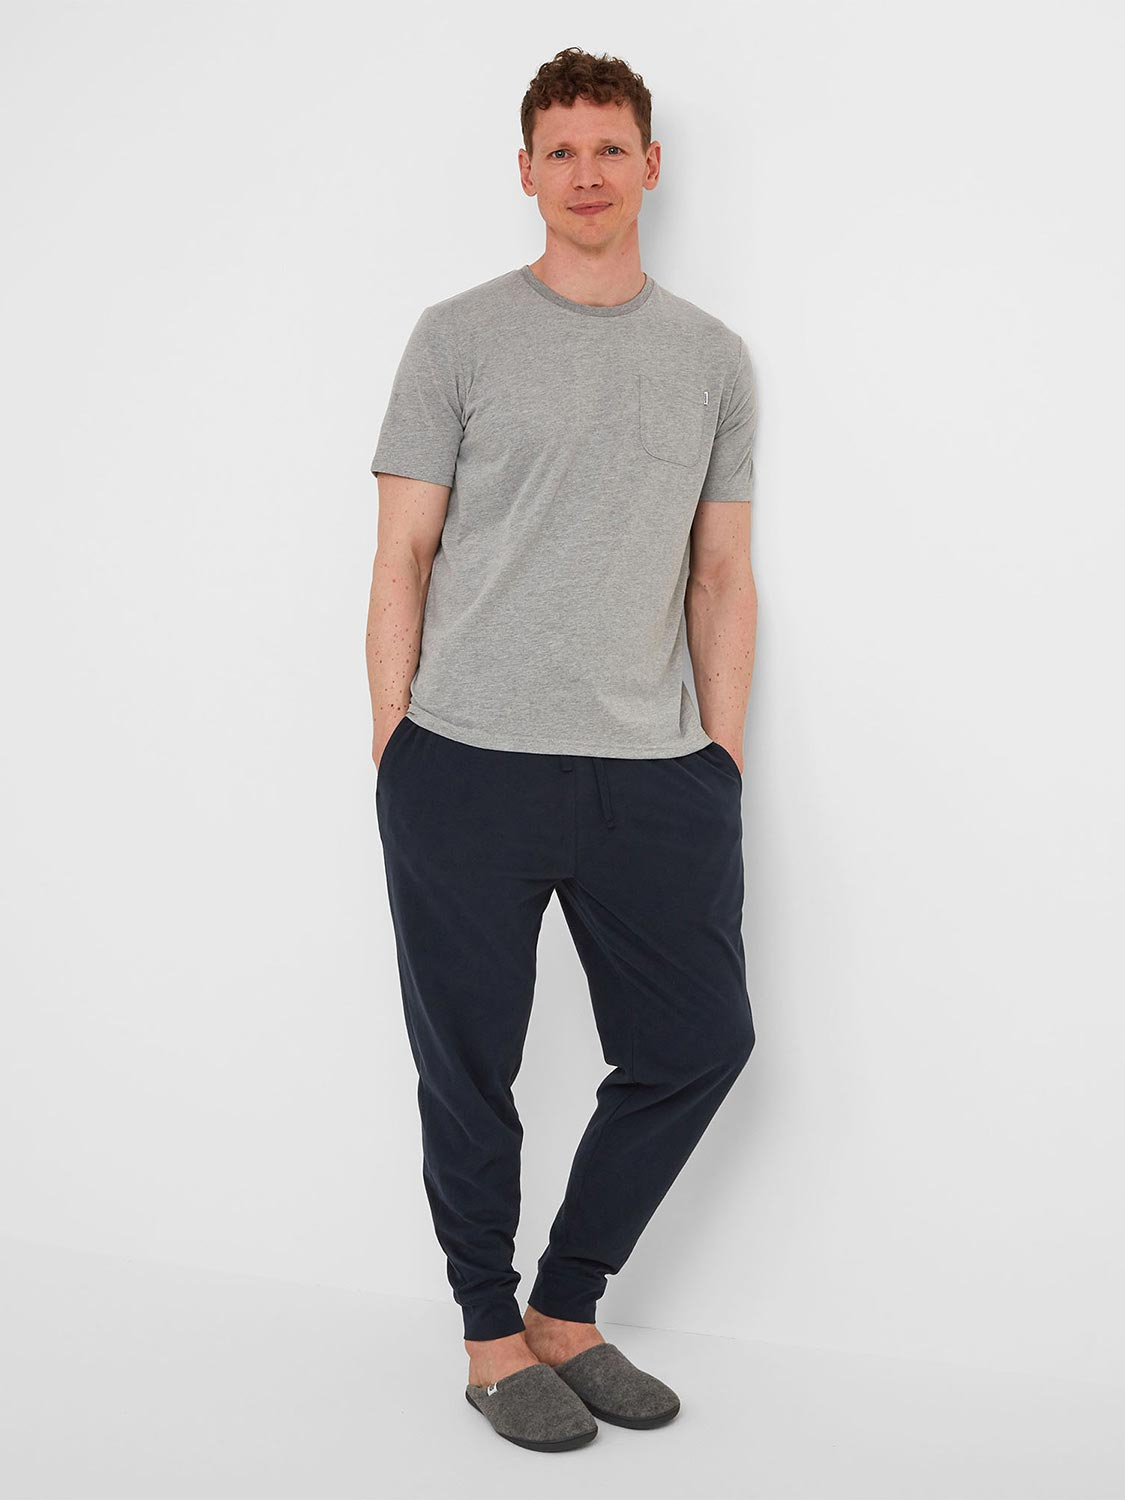 Chill Trouser Set - Size: XL Men’s Grey Tog24